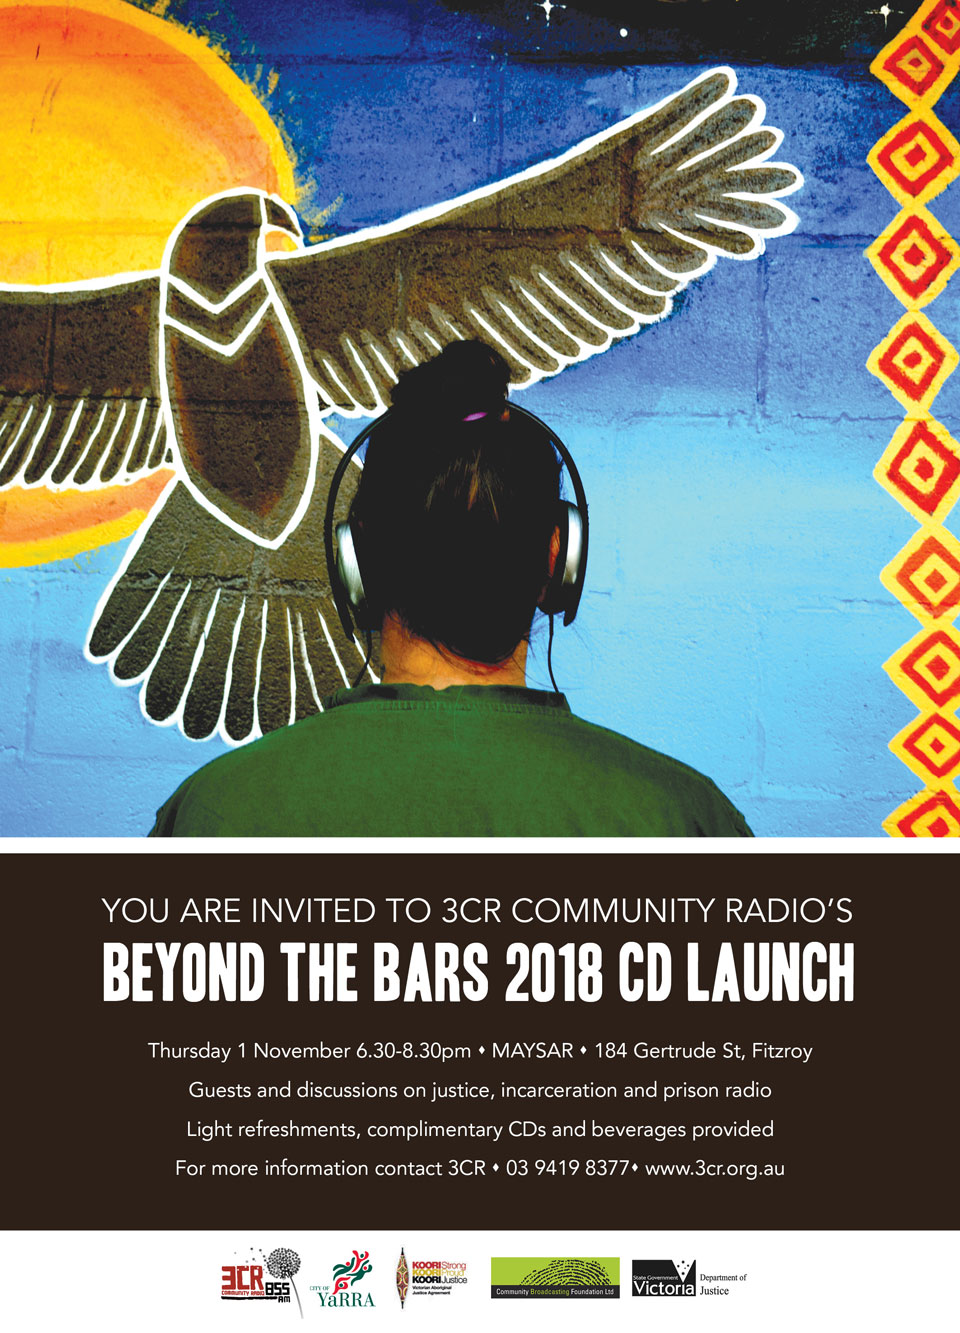 Beyond the Bars 2018 CD launch invitation